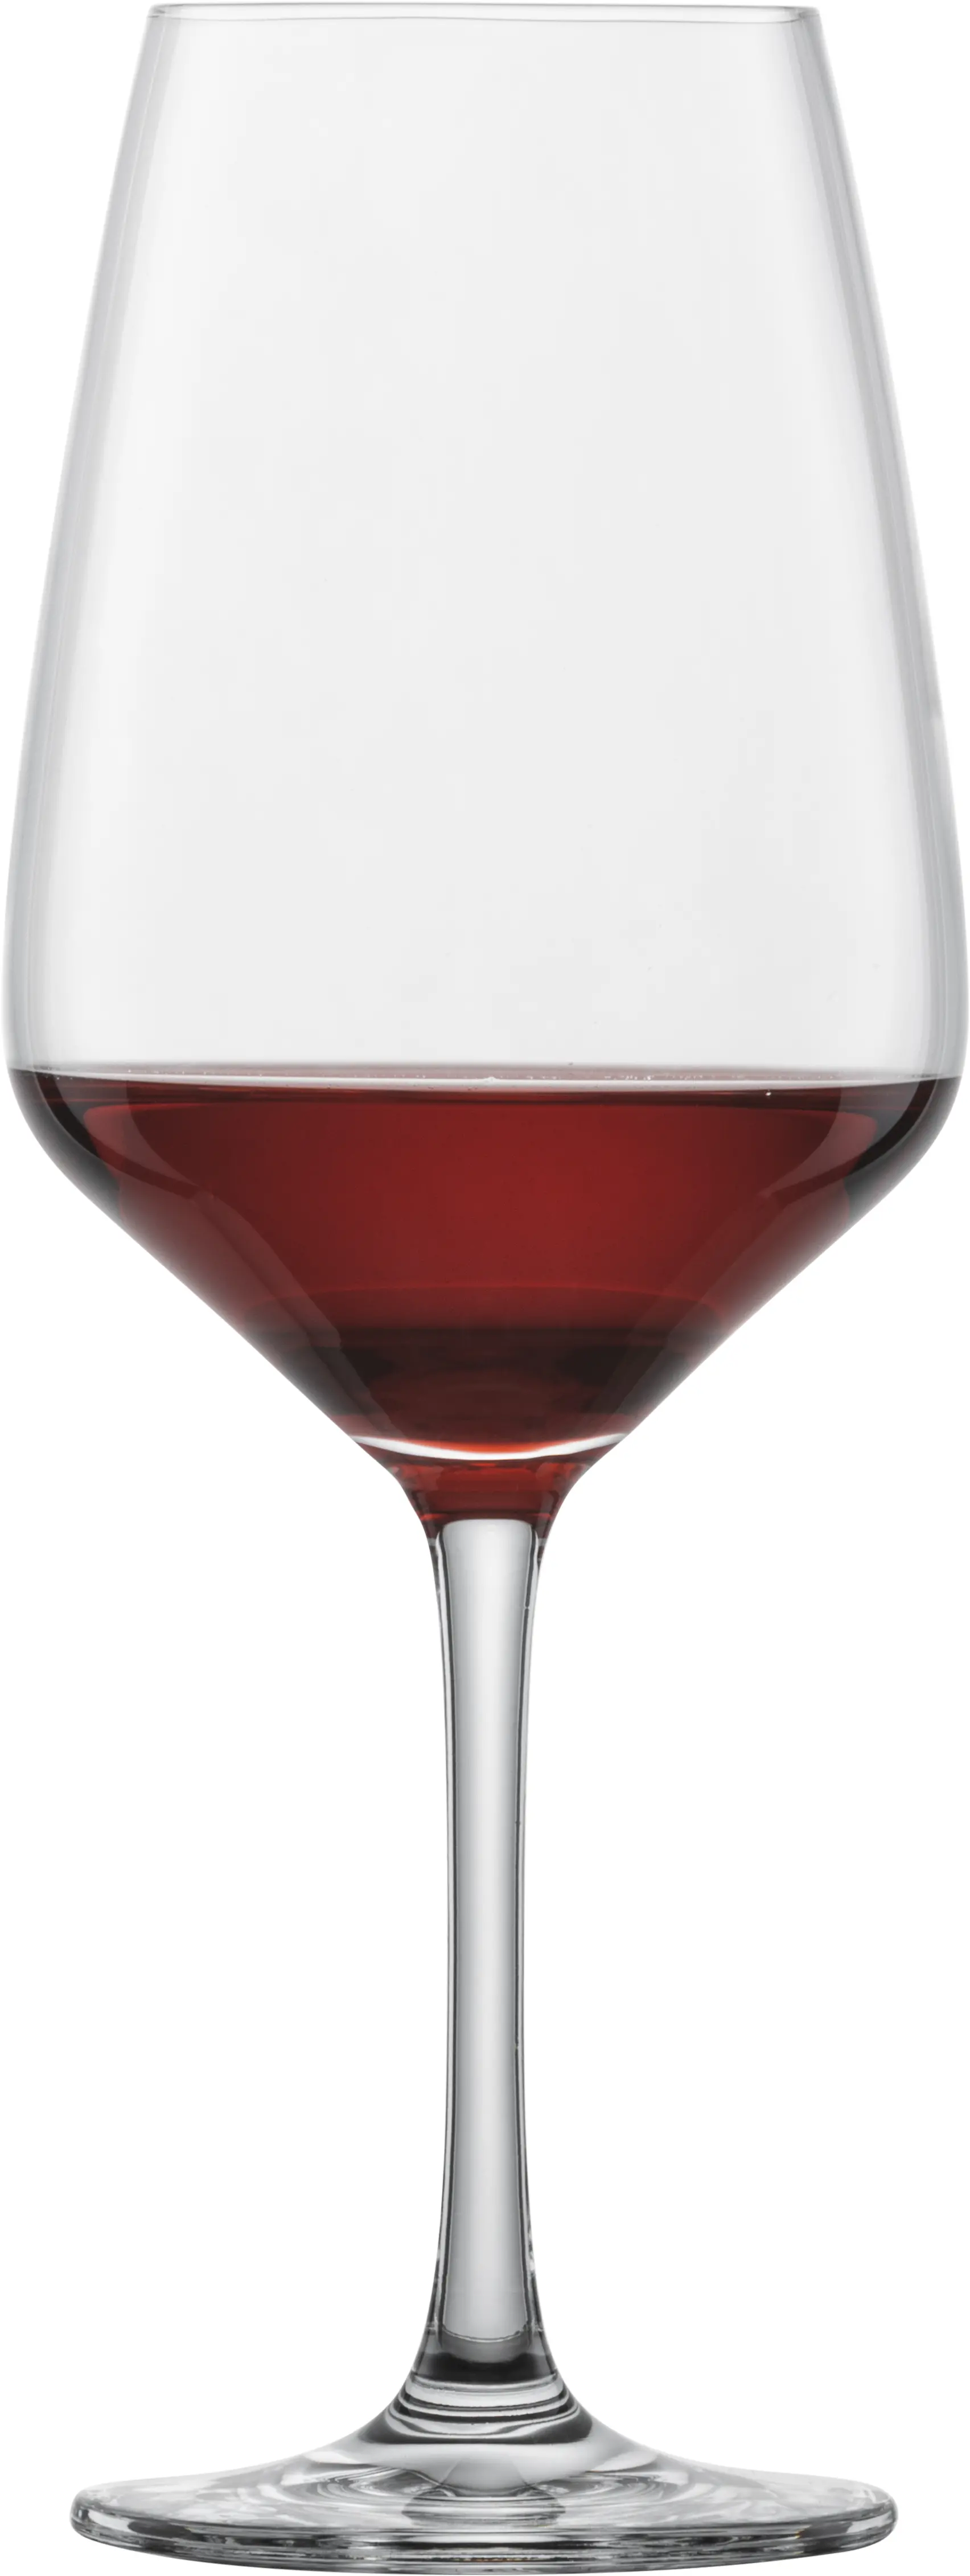 Rotweinglas - 497 ml